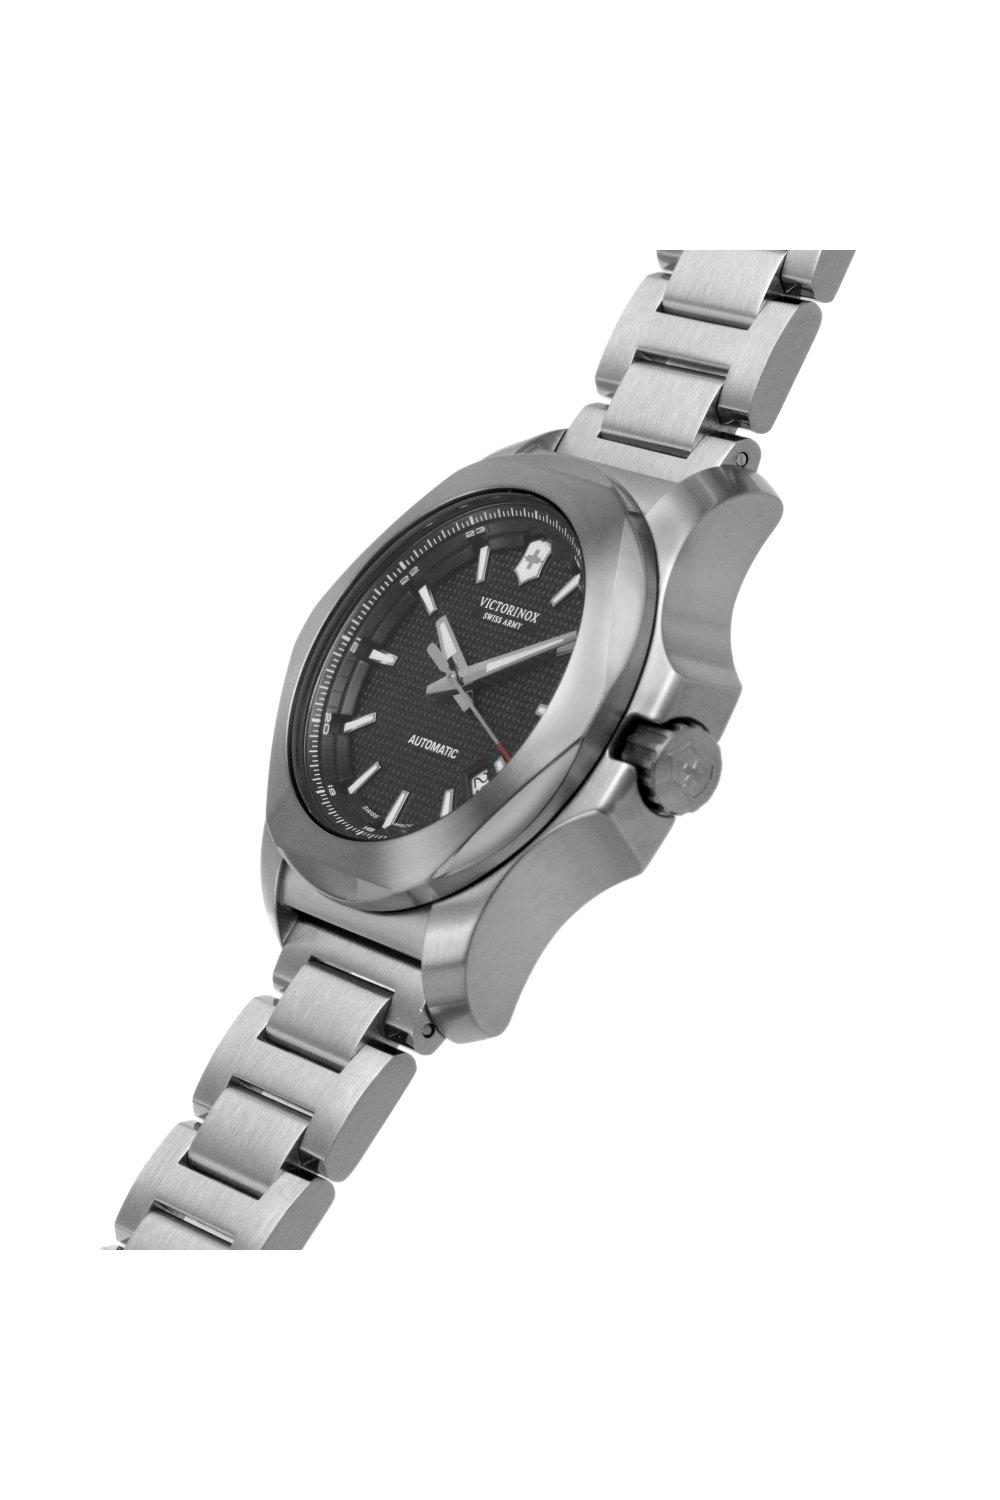 I.n.o.x Mechanical Titanium Luxury Analogue Automatic Watch - 241837